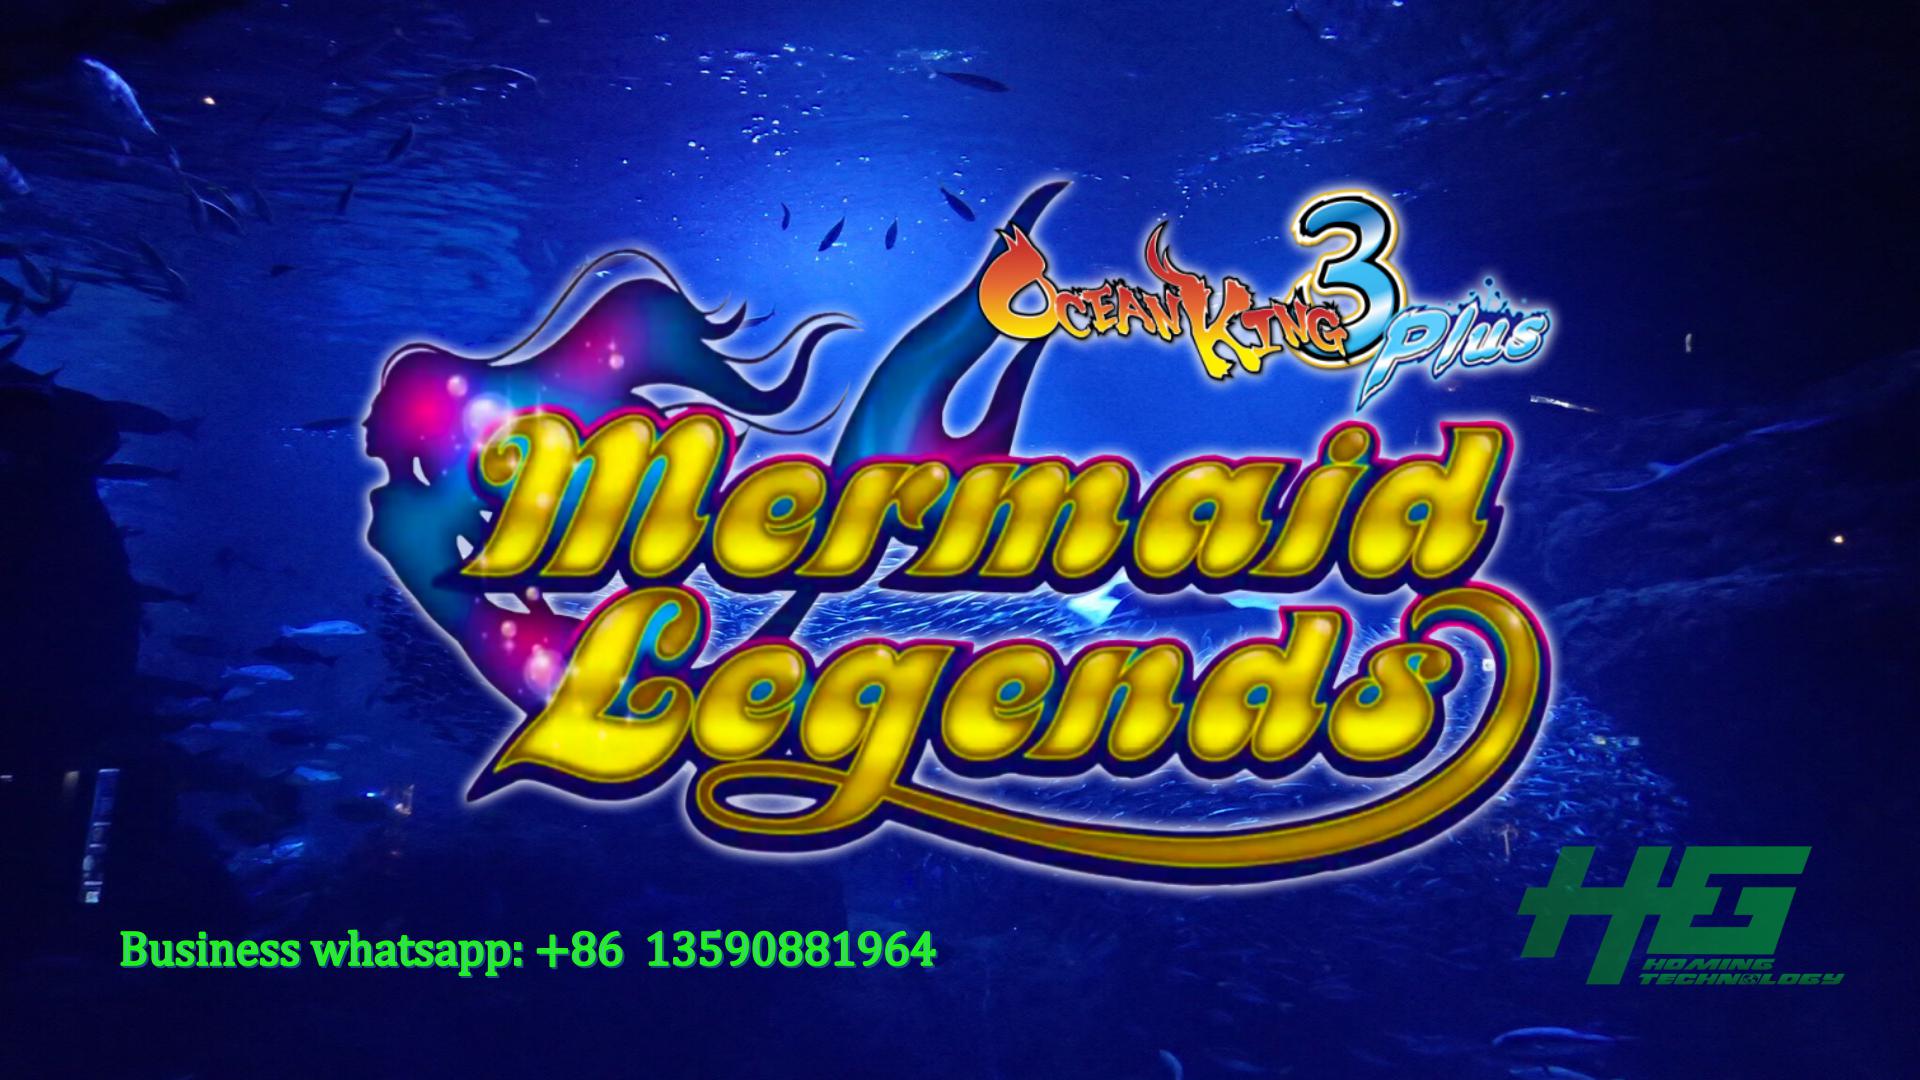 Newest IGS Original Ocean King 3 Plus Mermaid Legends Fishing Game Machine For Sale